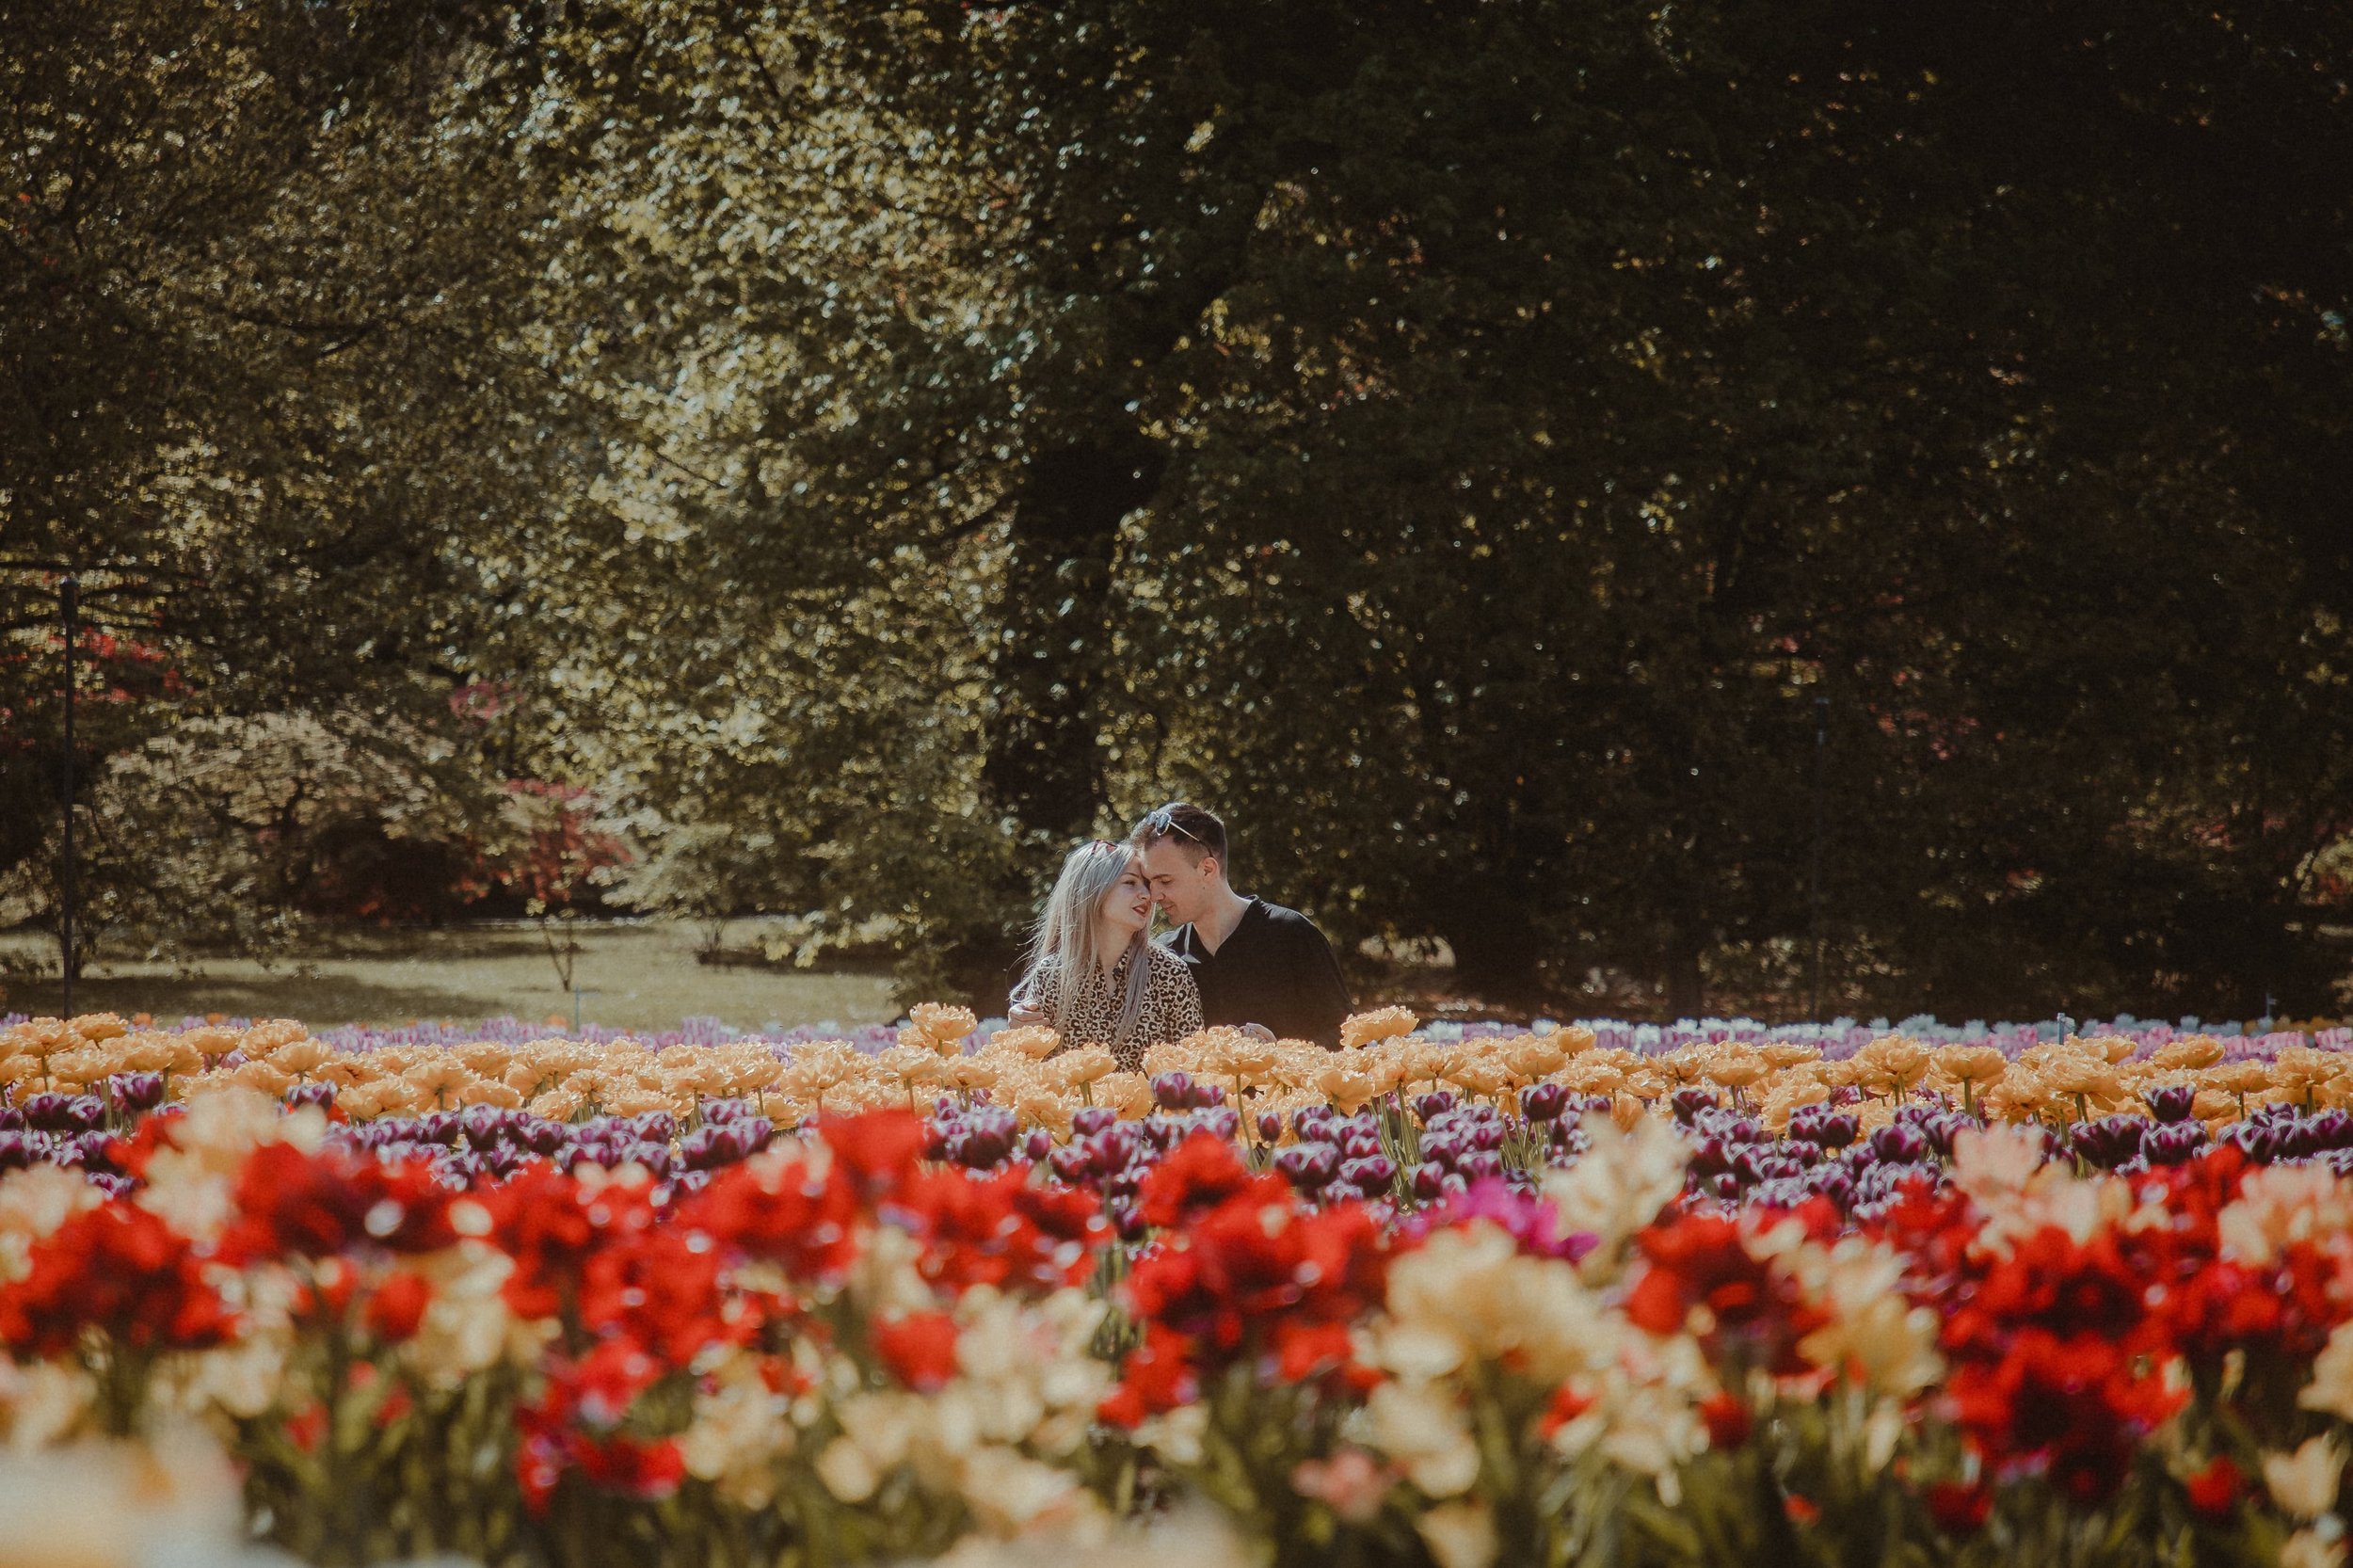 Breath of flowers - Romeo and Alina prewedding in Villa Taranto